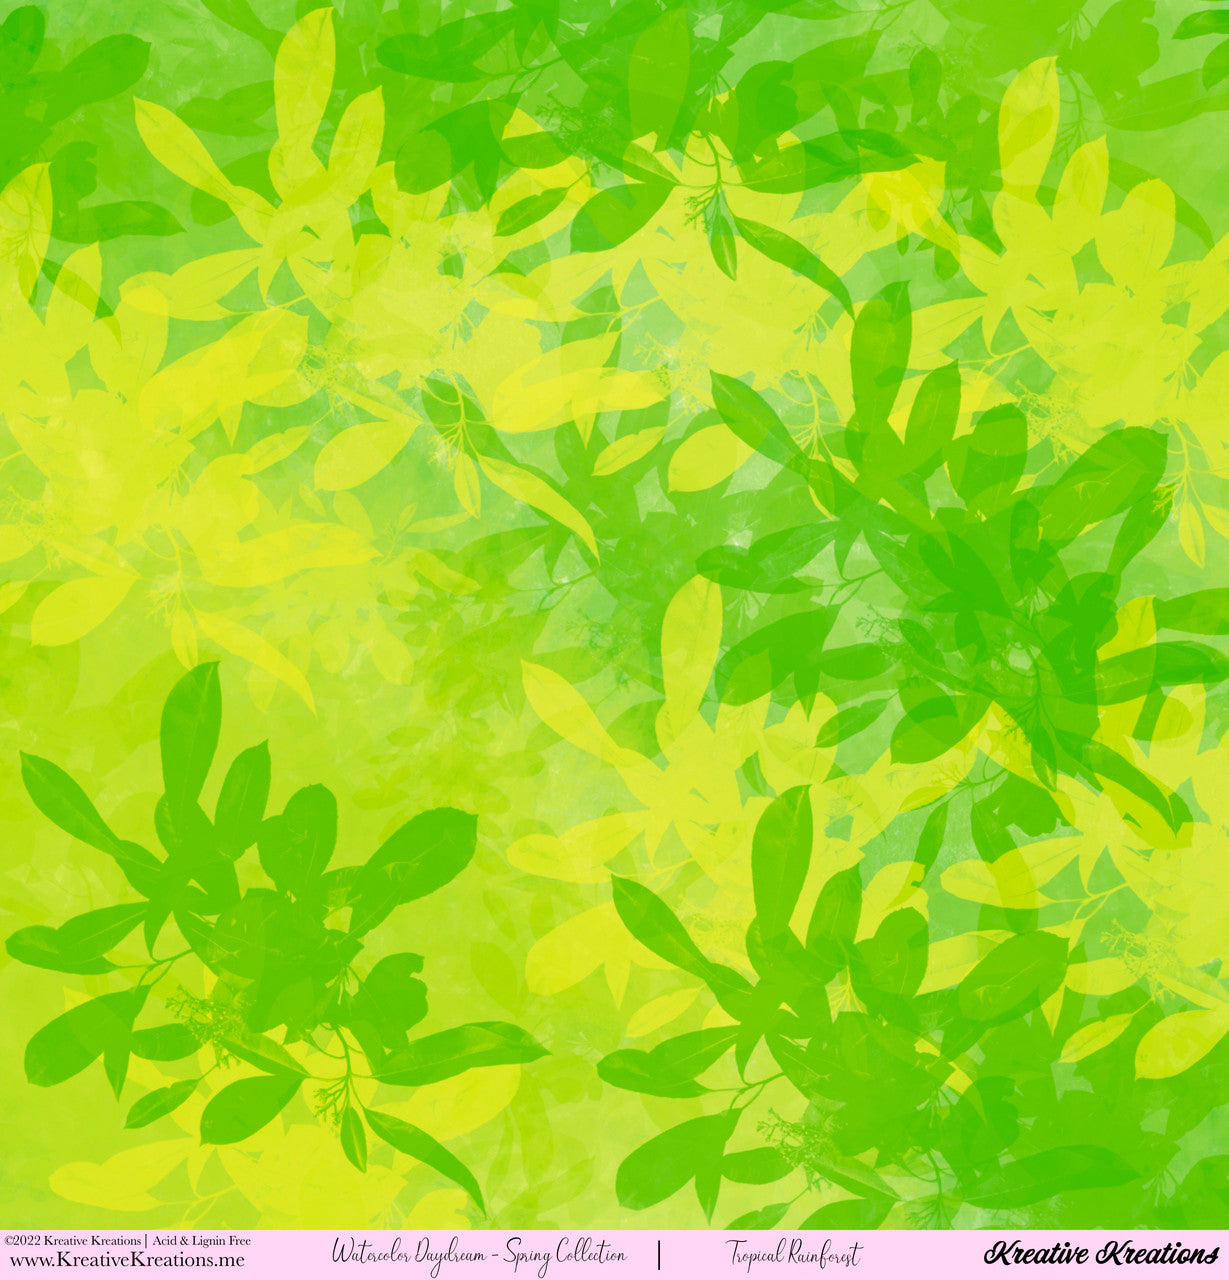 Kreative Kreations Aquarel Daydream - Lentecollectie 30 x 30 cm papiercollectie